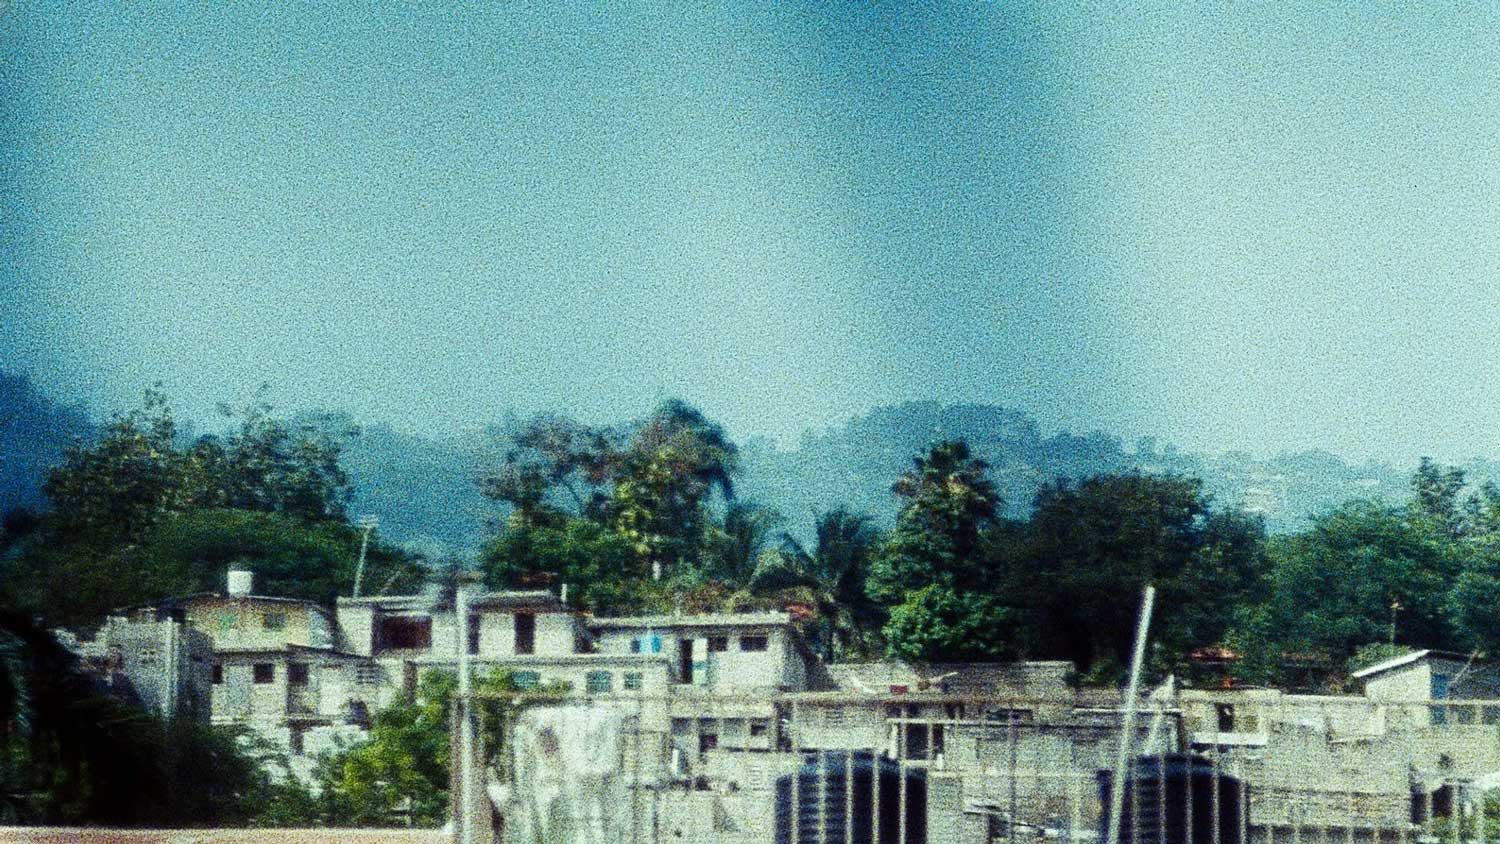 a noisy film image of a neighborhood bordering a jungle.